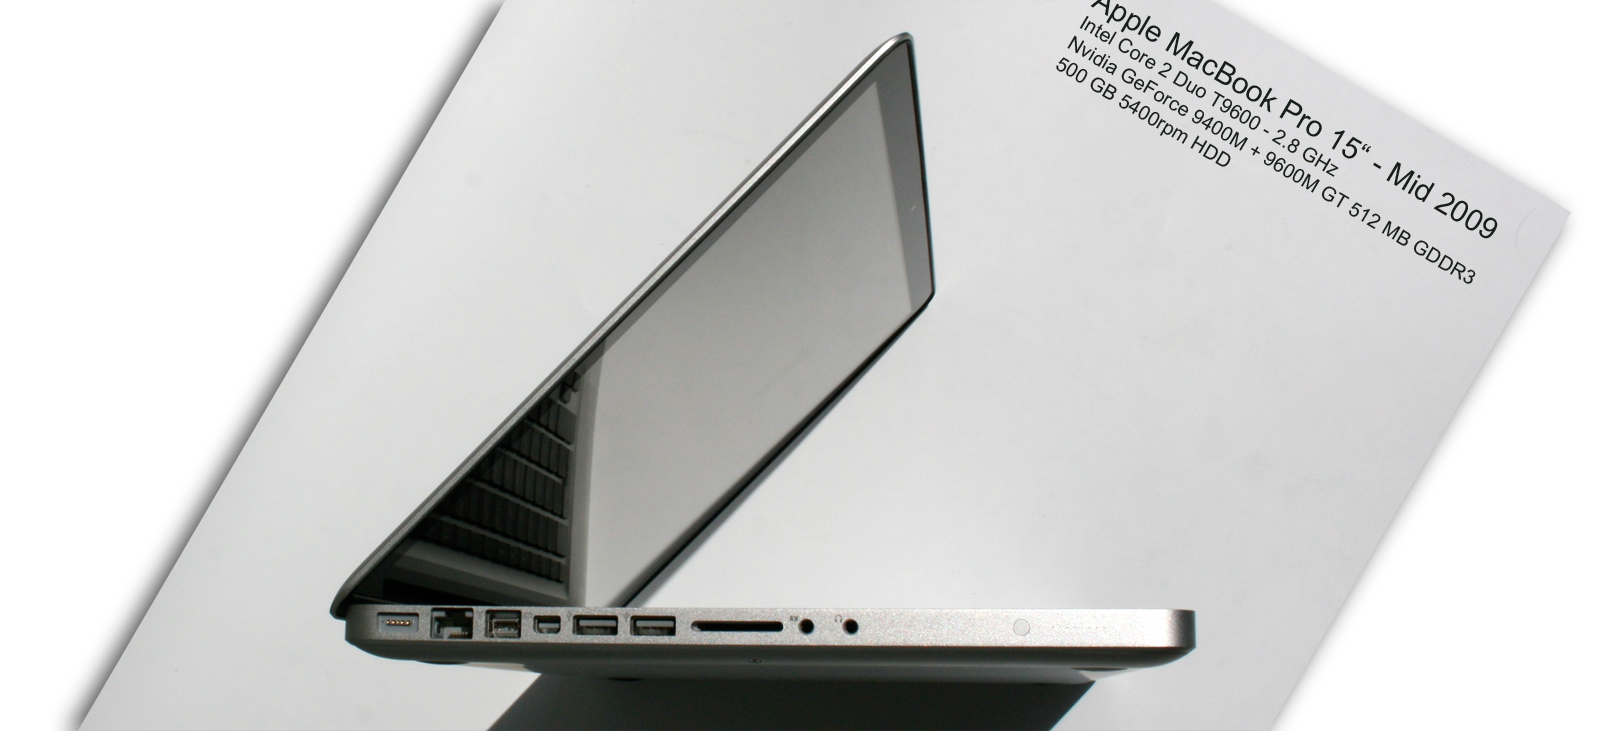 Coque Macbook Pro 15 Pouces unibody Bleue 